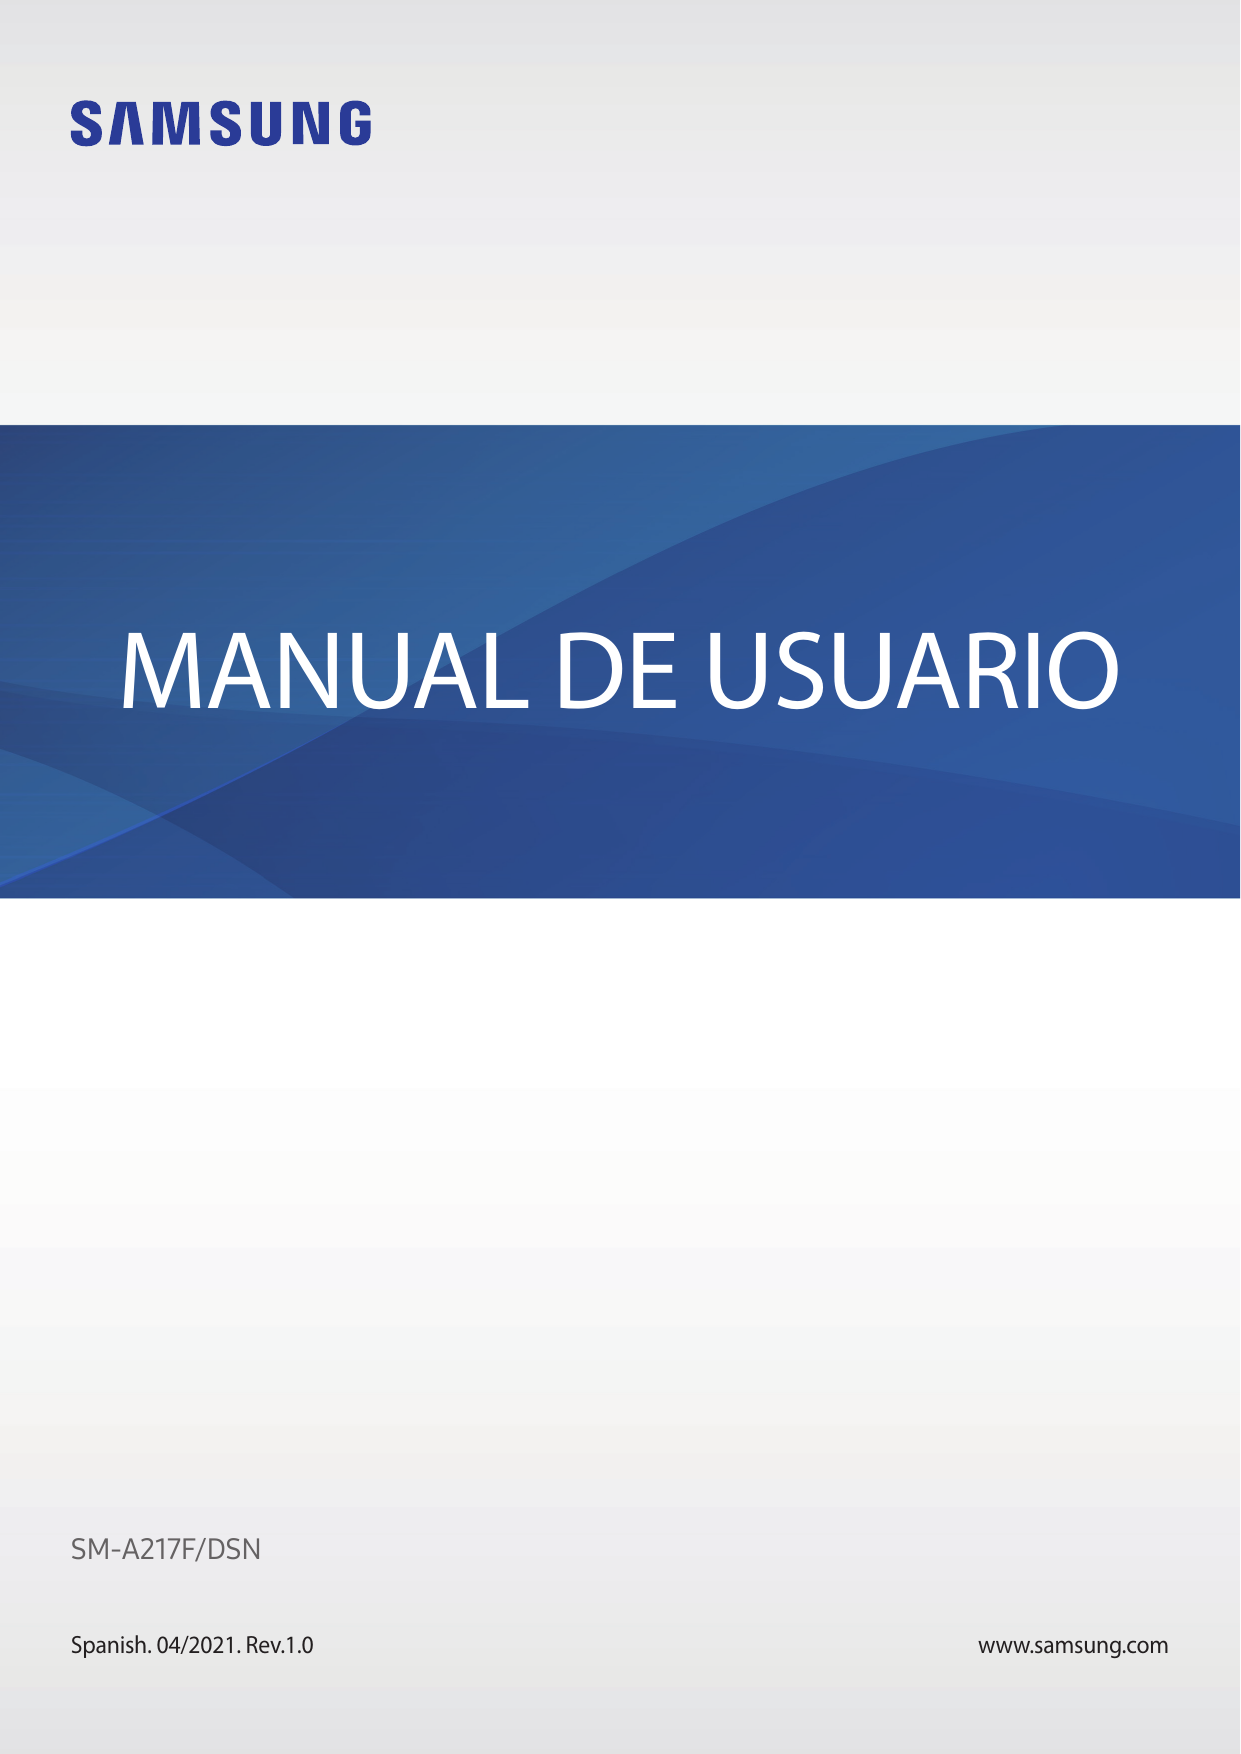 MANUAL DE USUARIOSM-A217F/DSNSpanish. 04/2021. Rev.1.0www.samsung.com